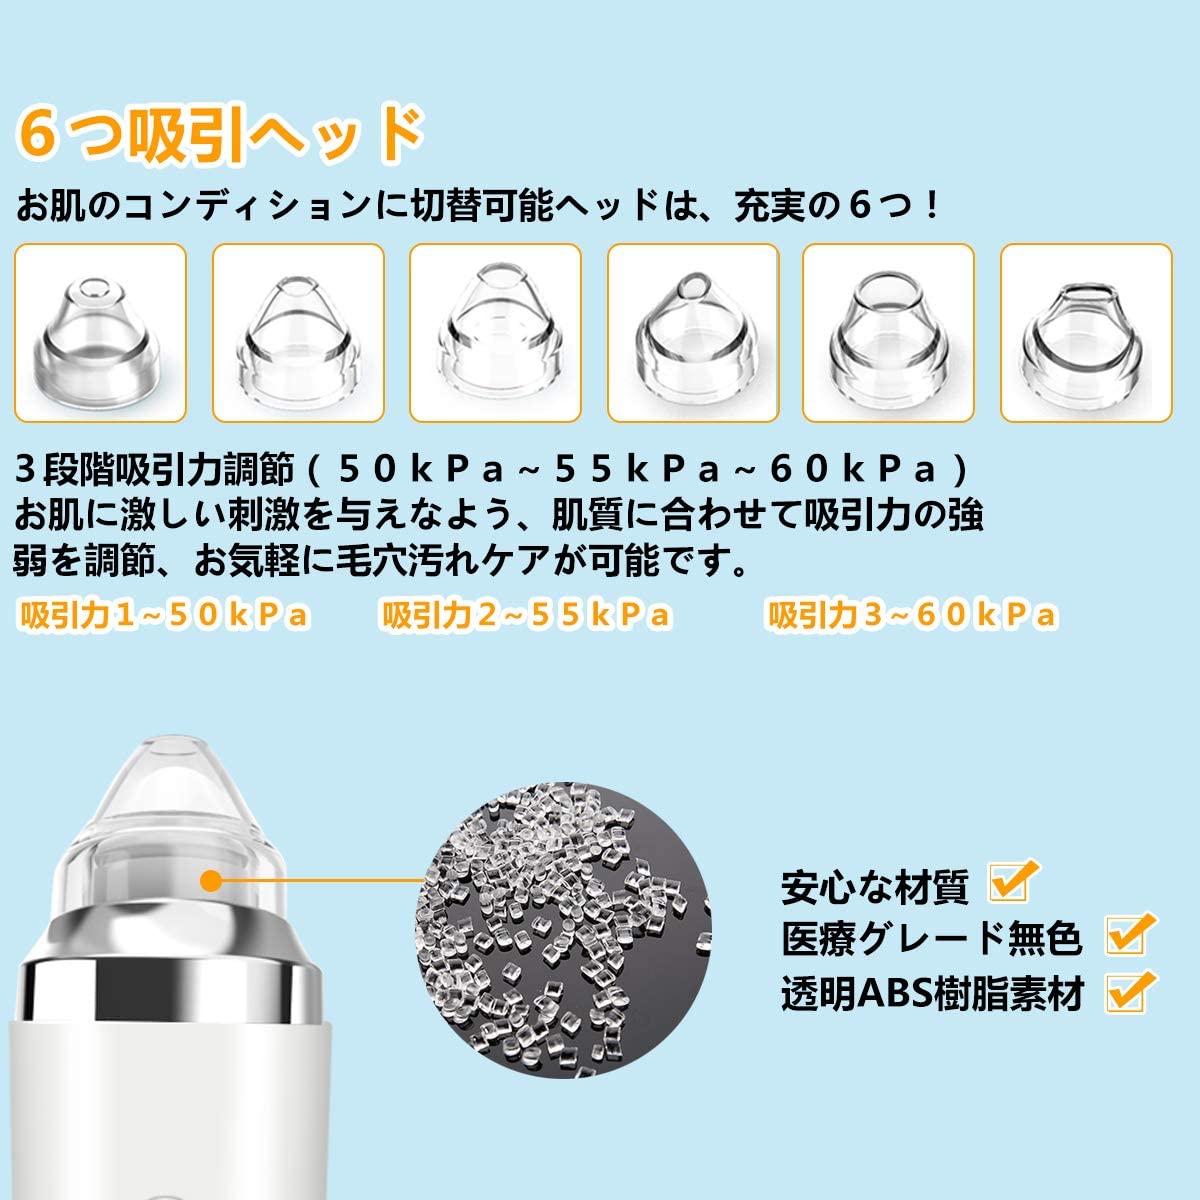 COYUTA(コユタ) 毛穴吸引器の商品画像6 